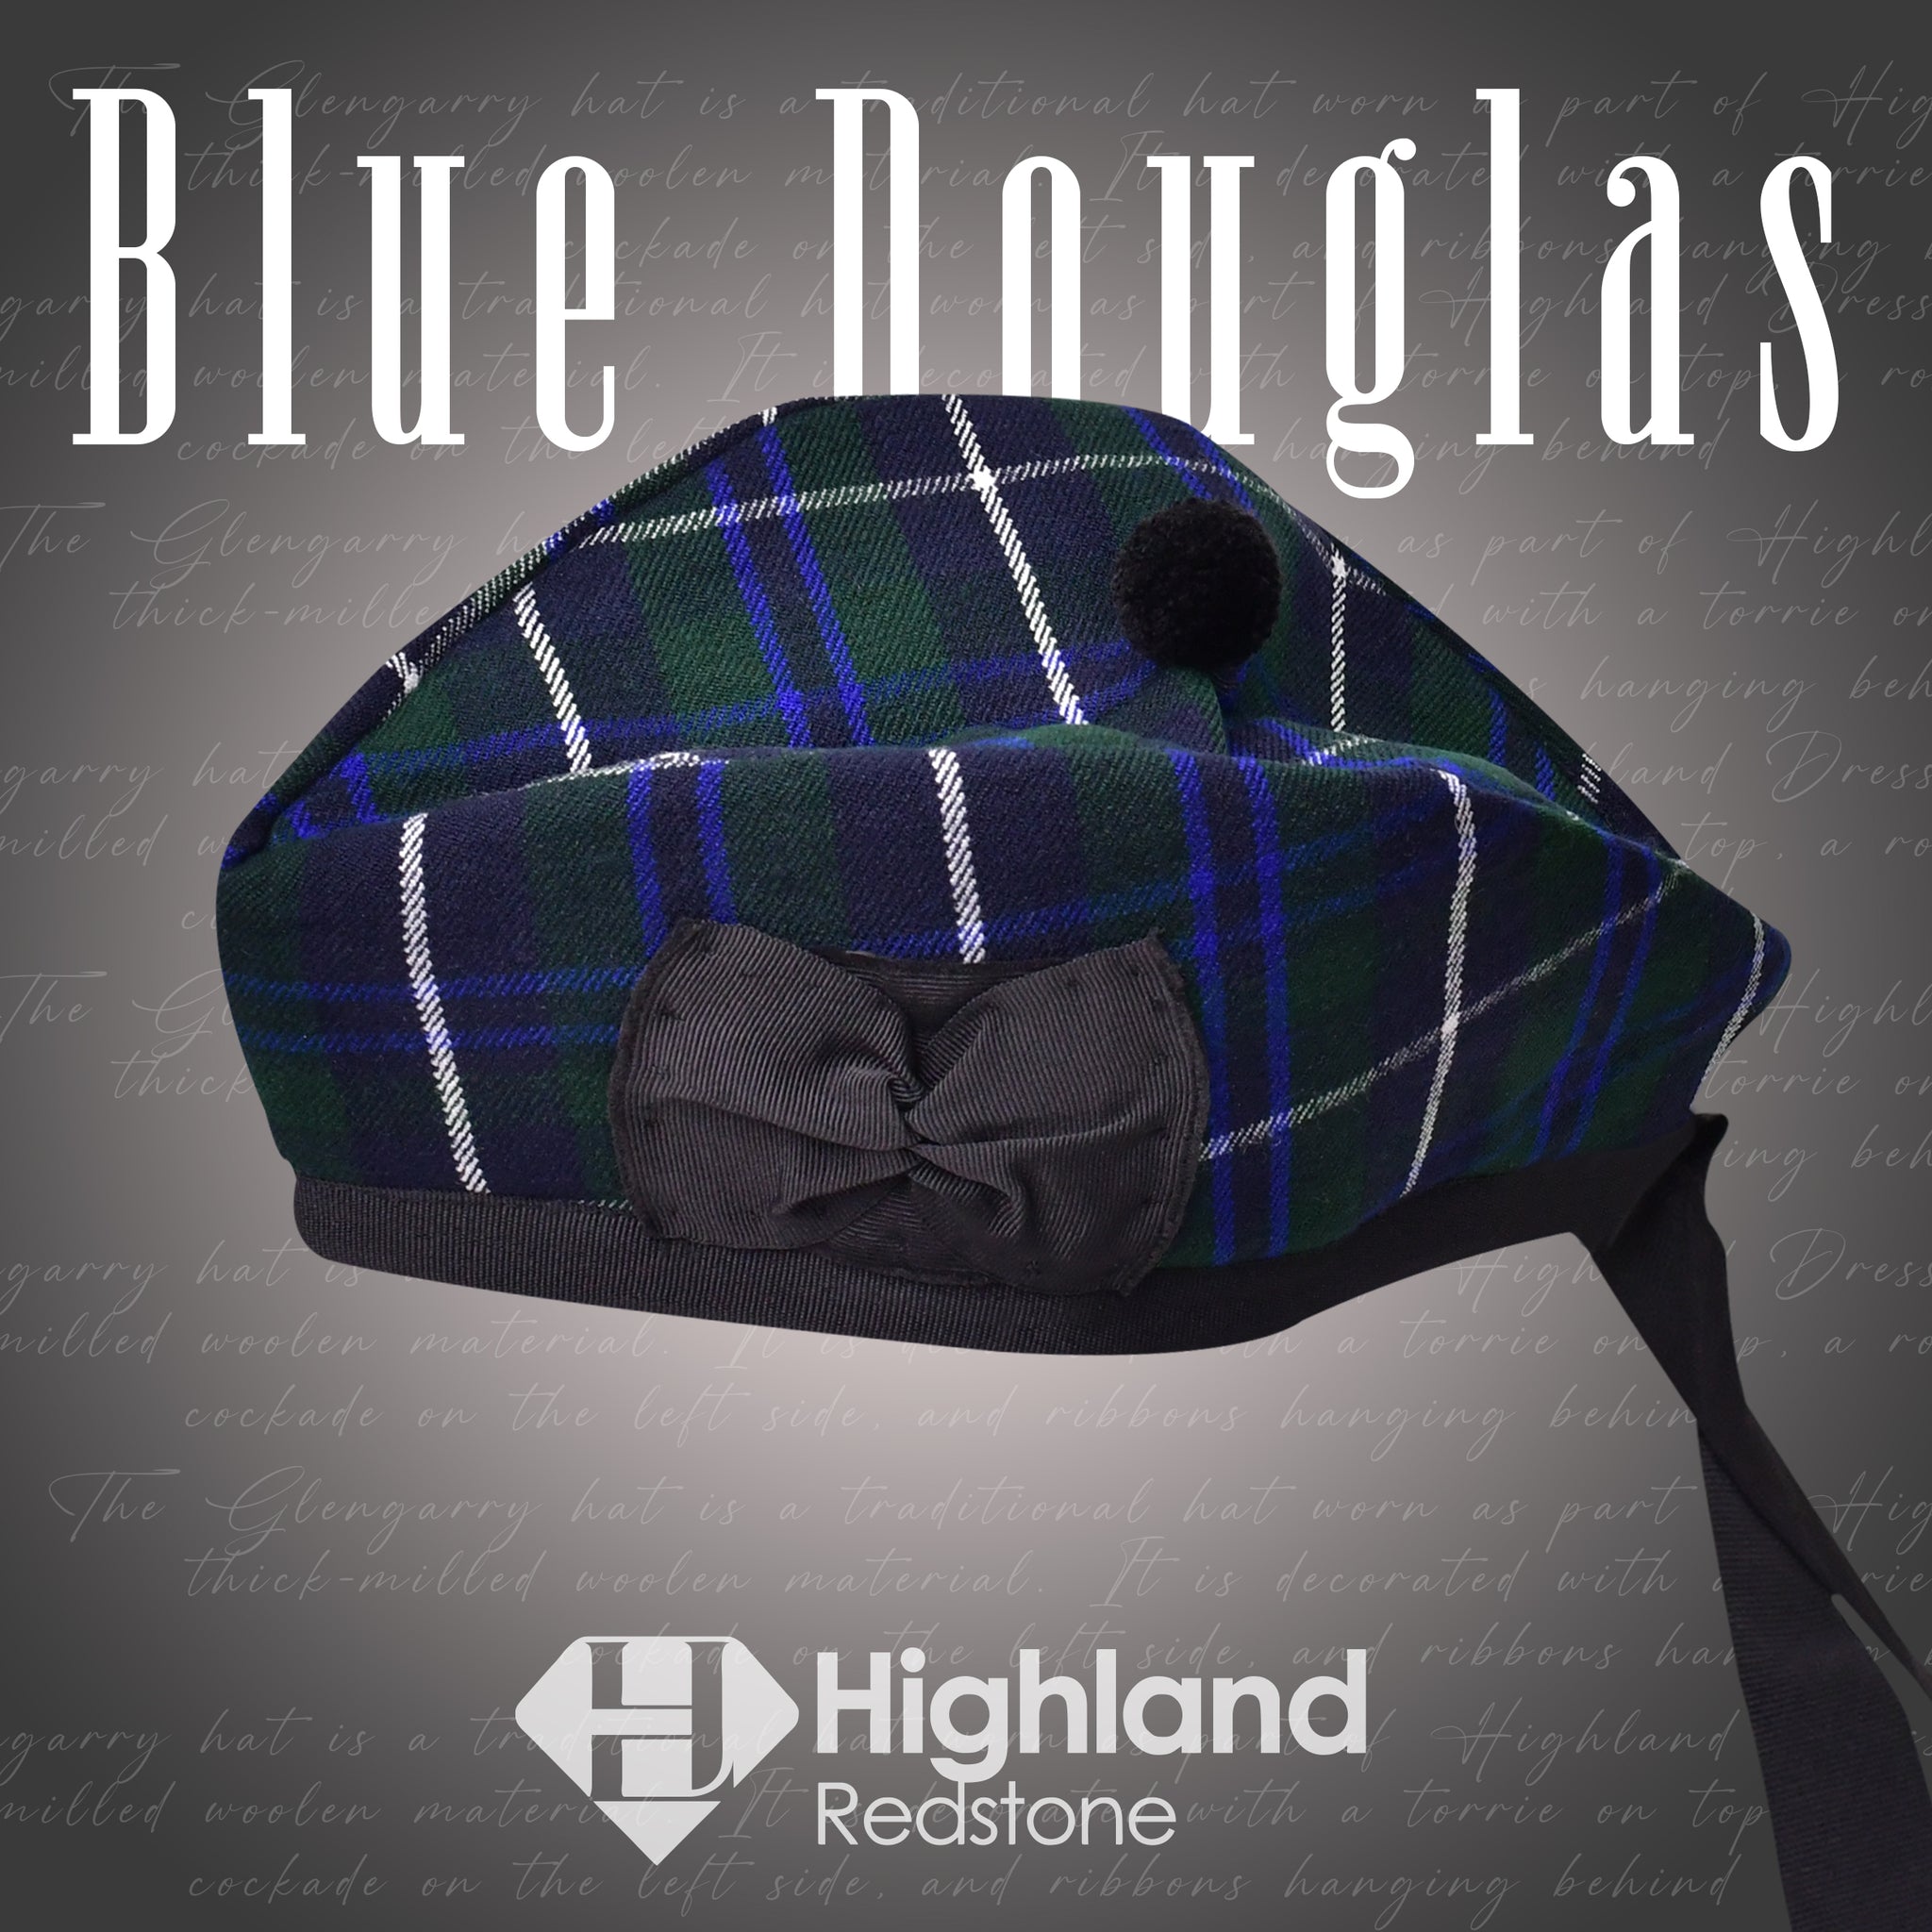 Blue Douglas Glengarry